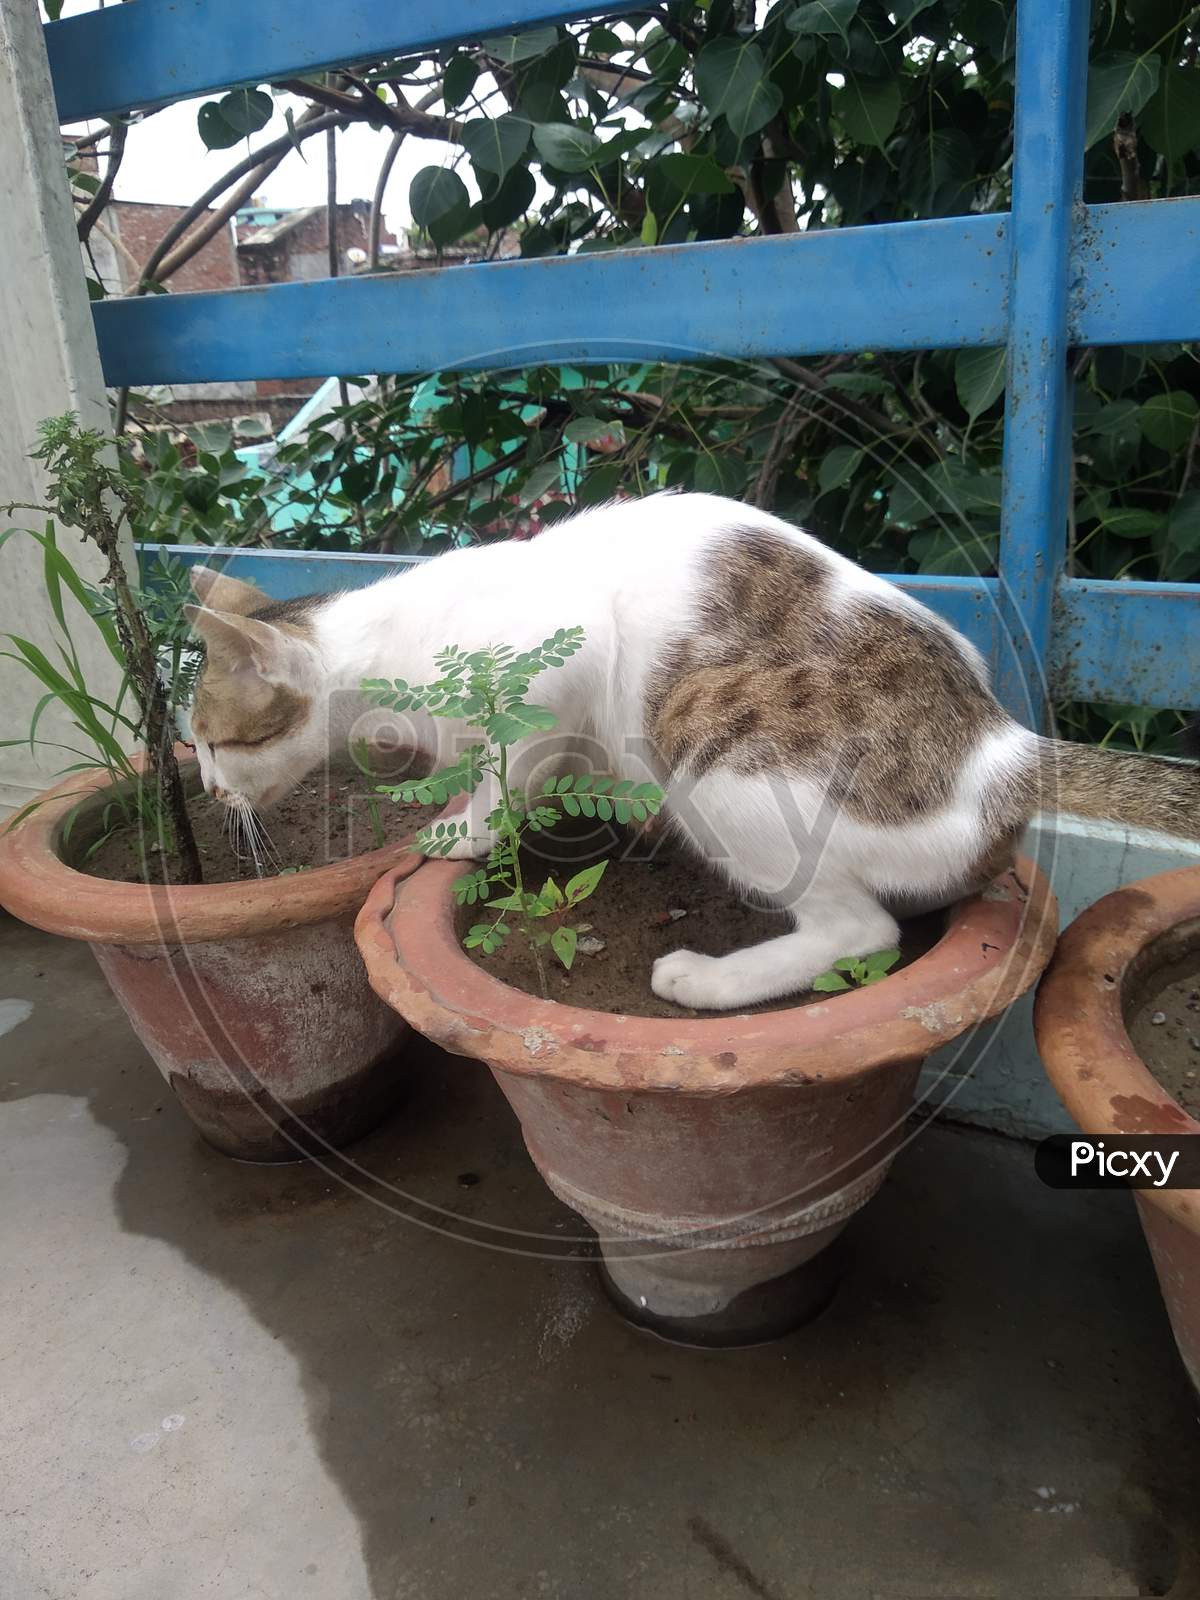 A cat sitting on a flower pot.